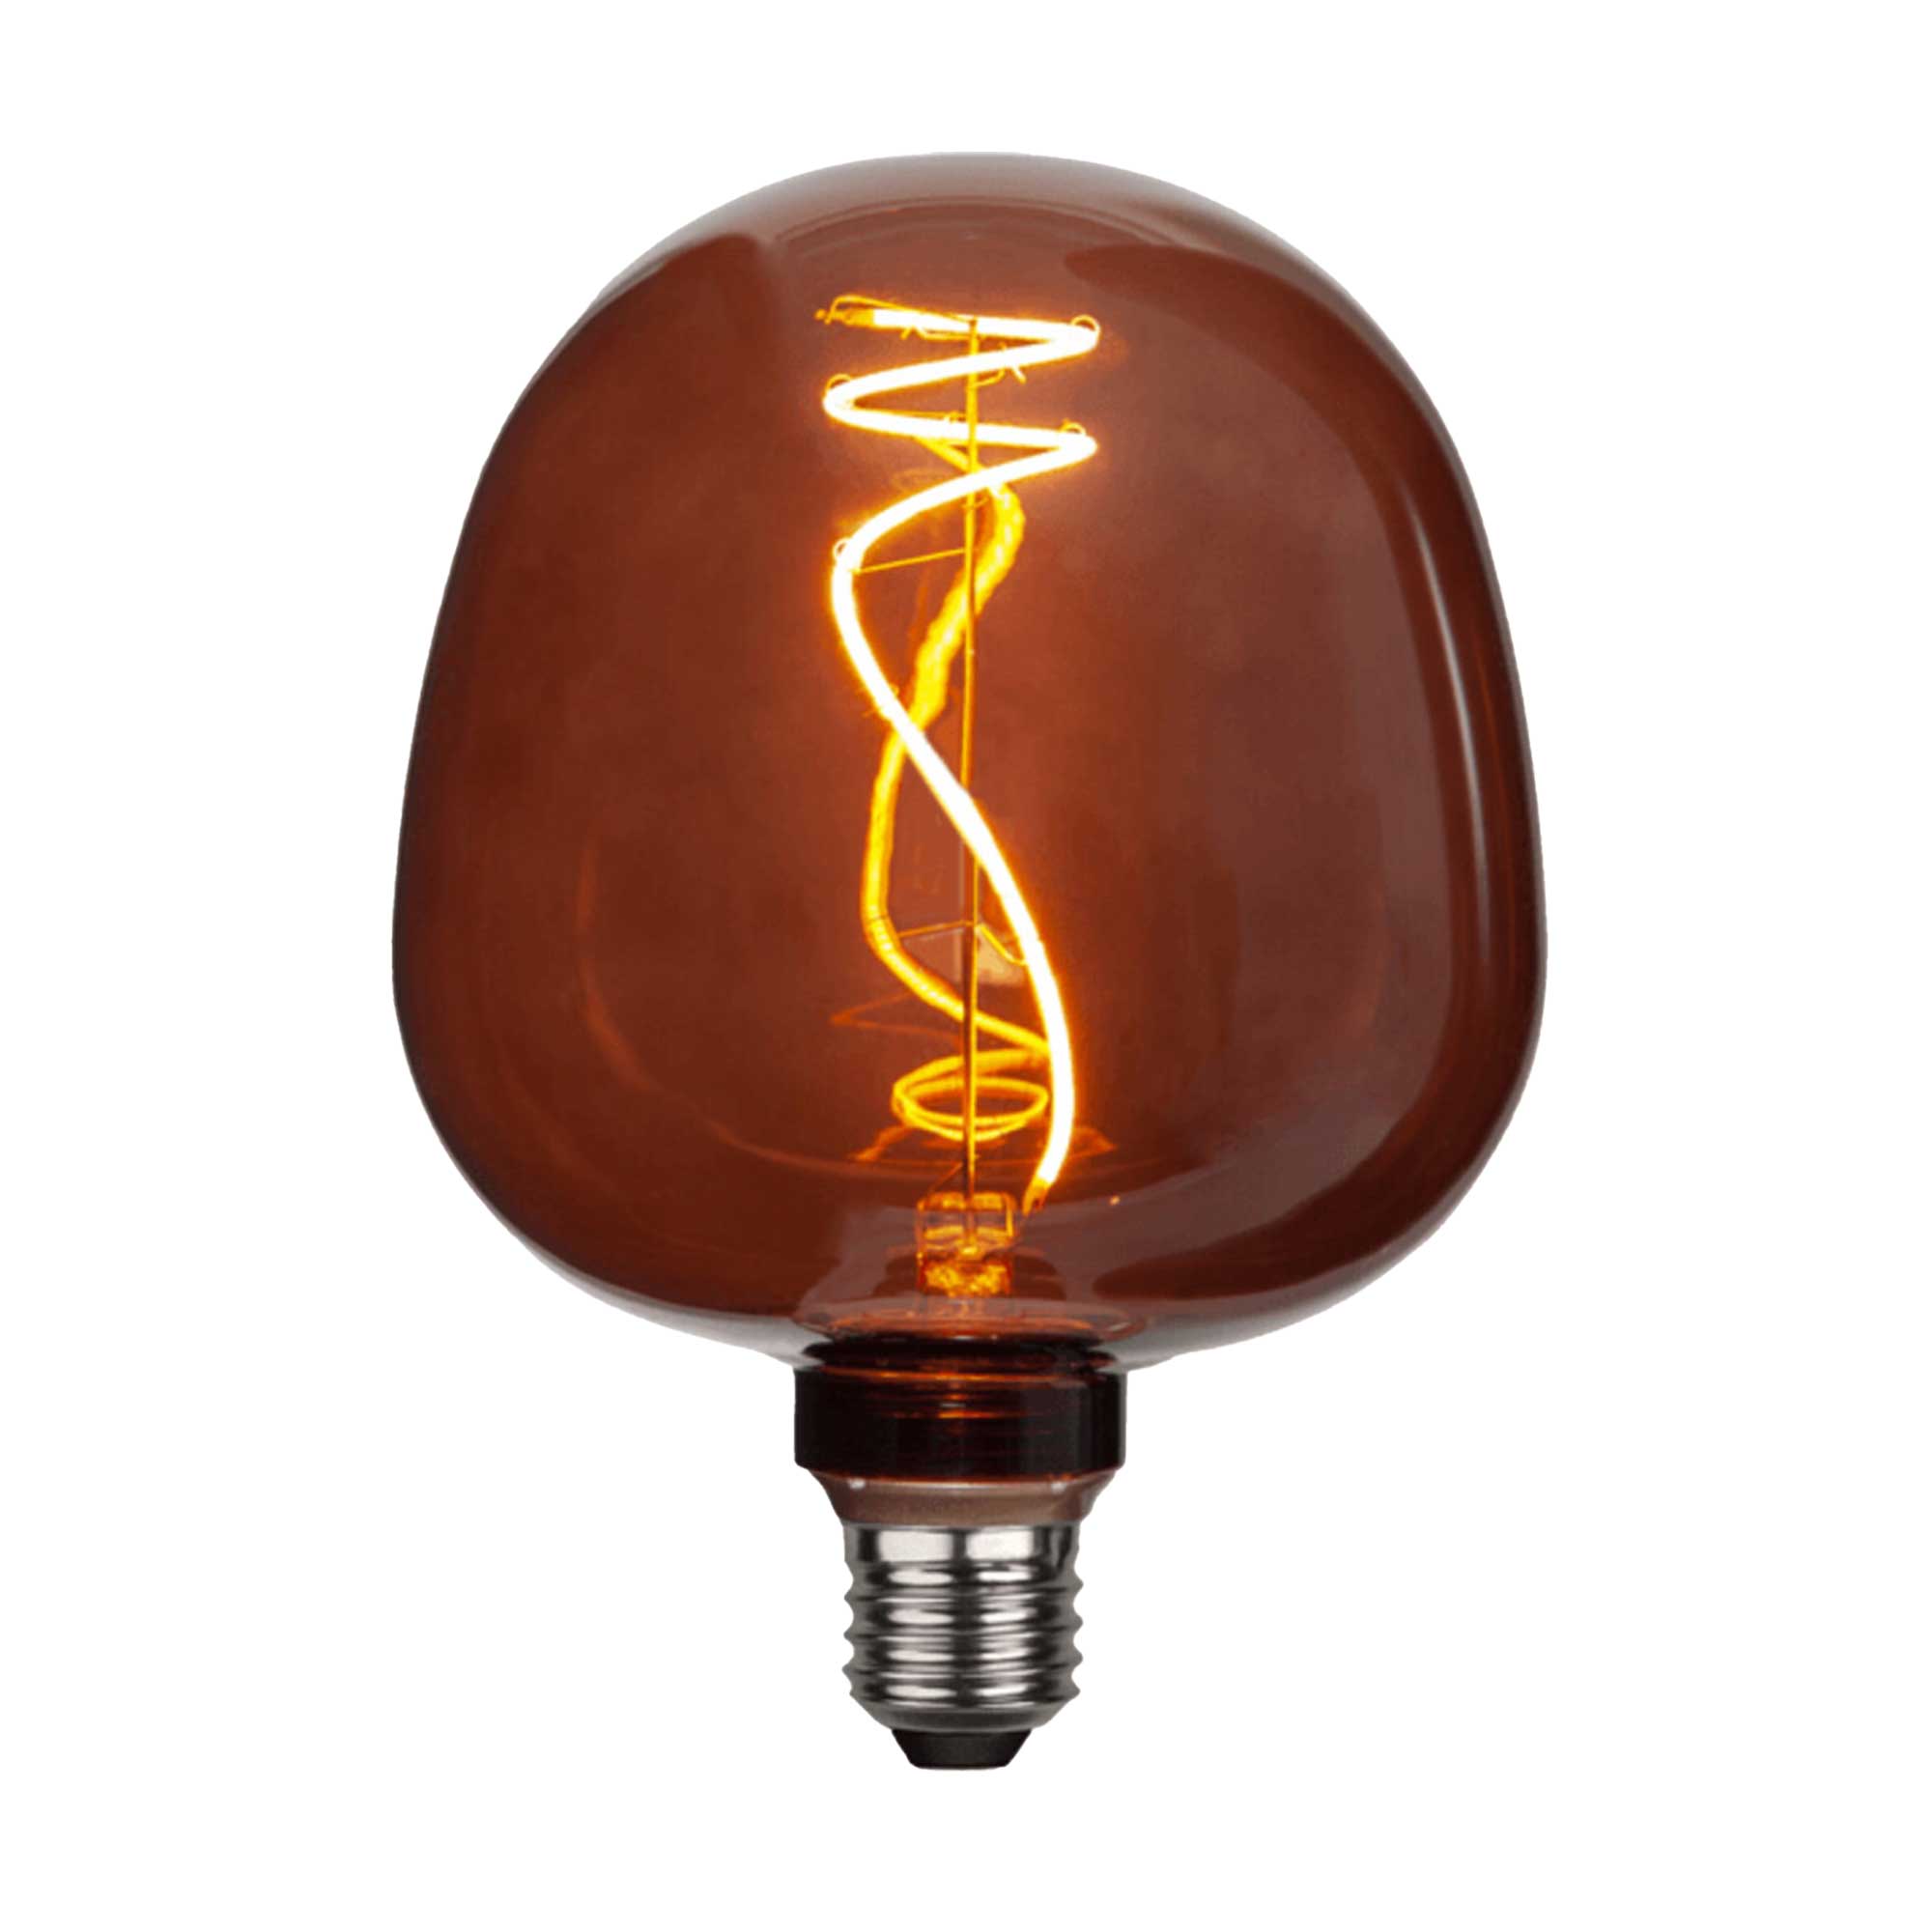 LED light bulb "Apple Cognac"